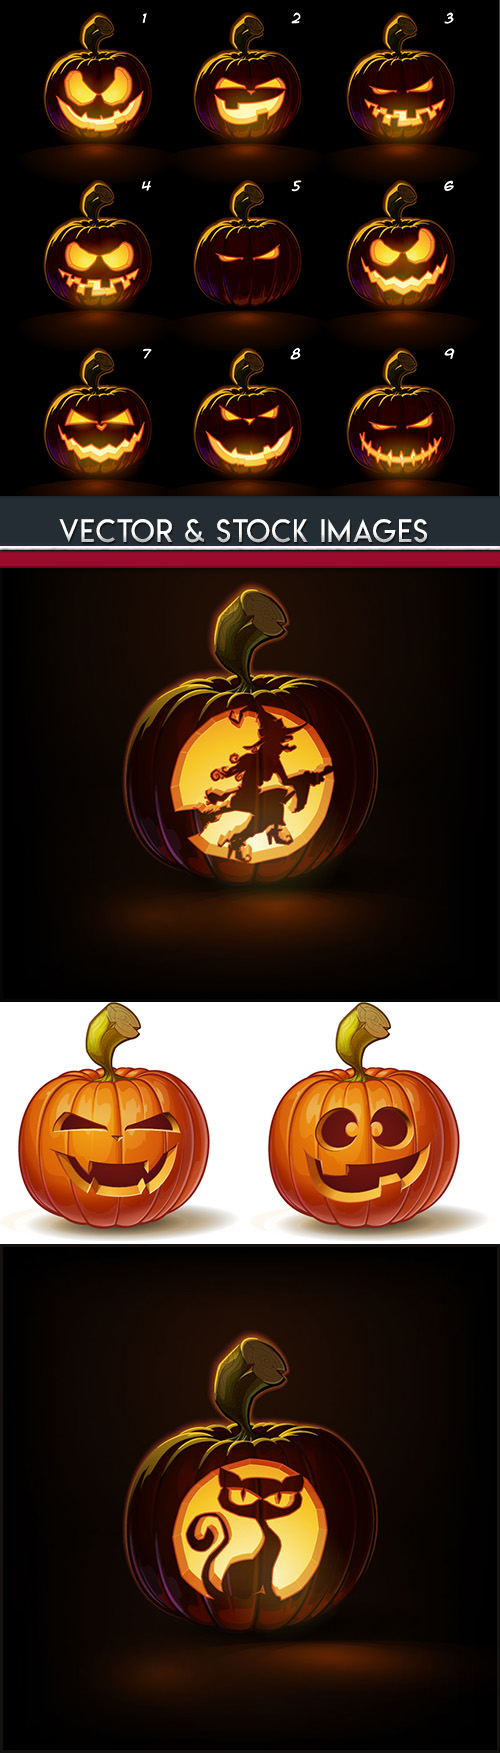 Happy Halloween pumpkin illustration collection